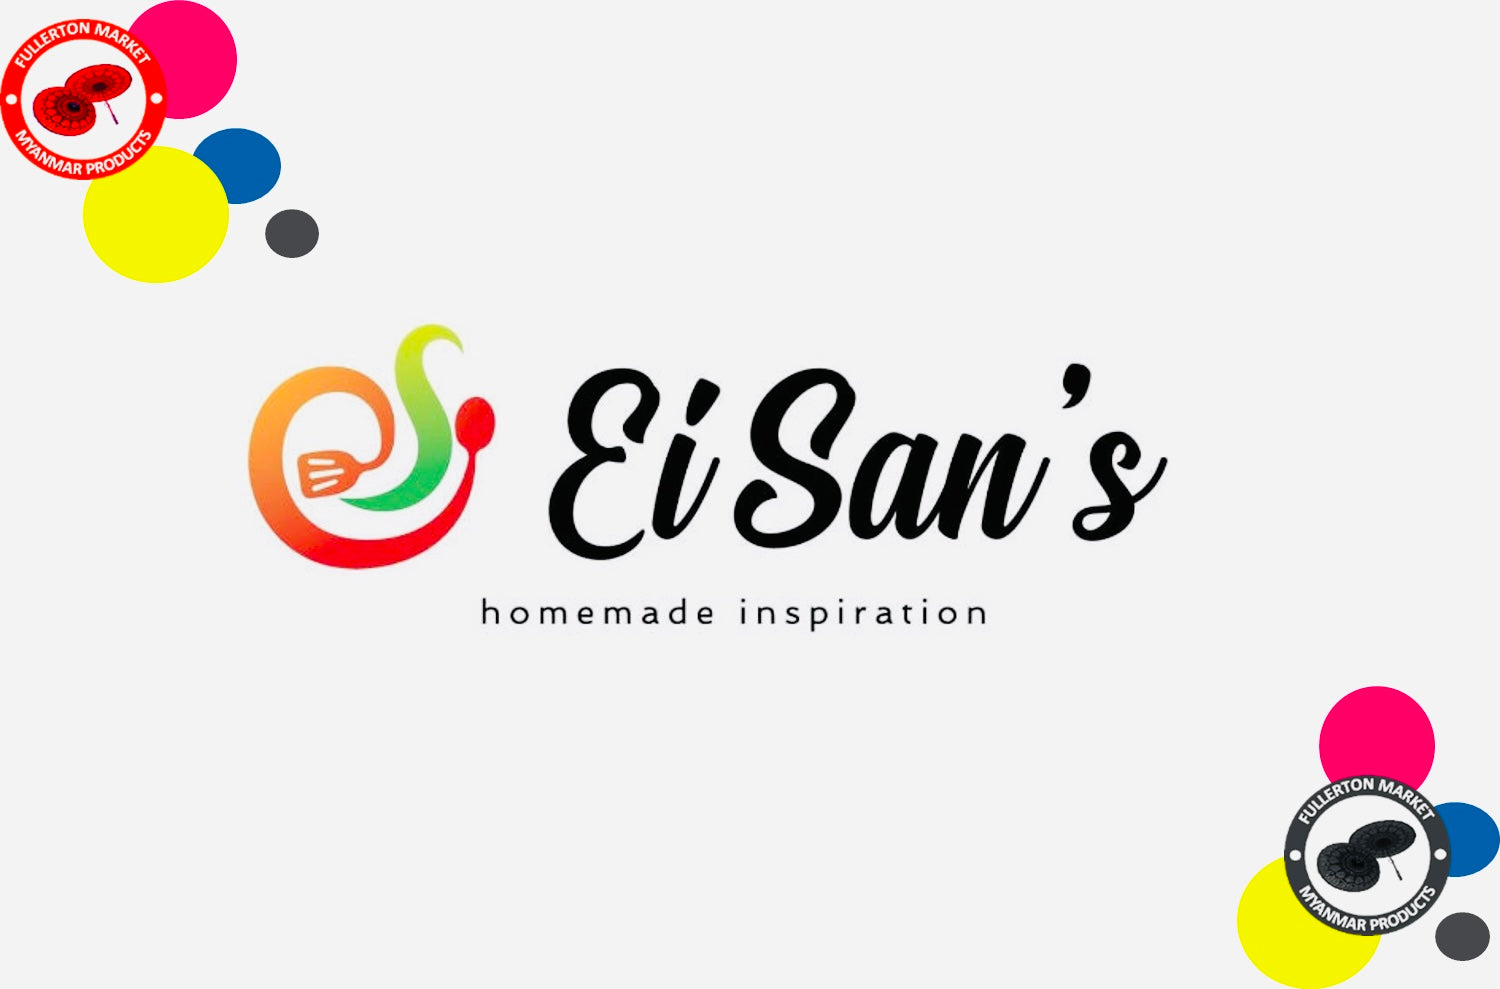 EiSan’s Homemade Inspiration